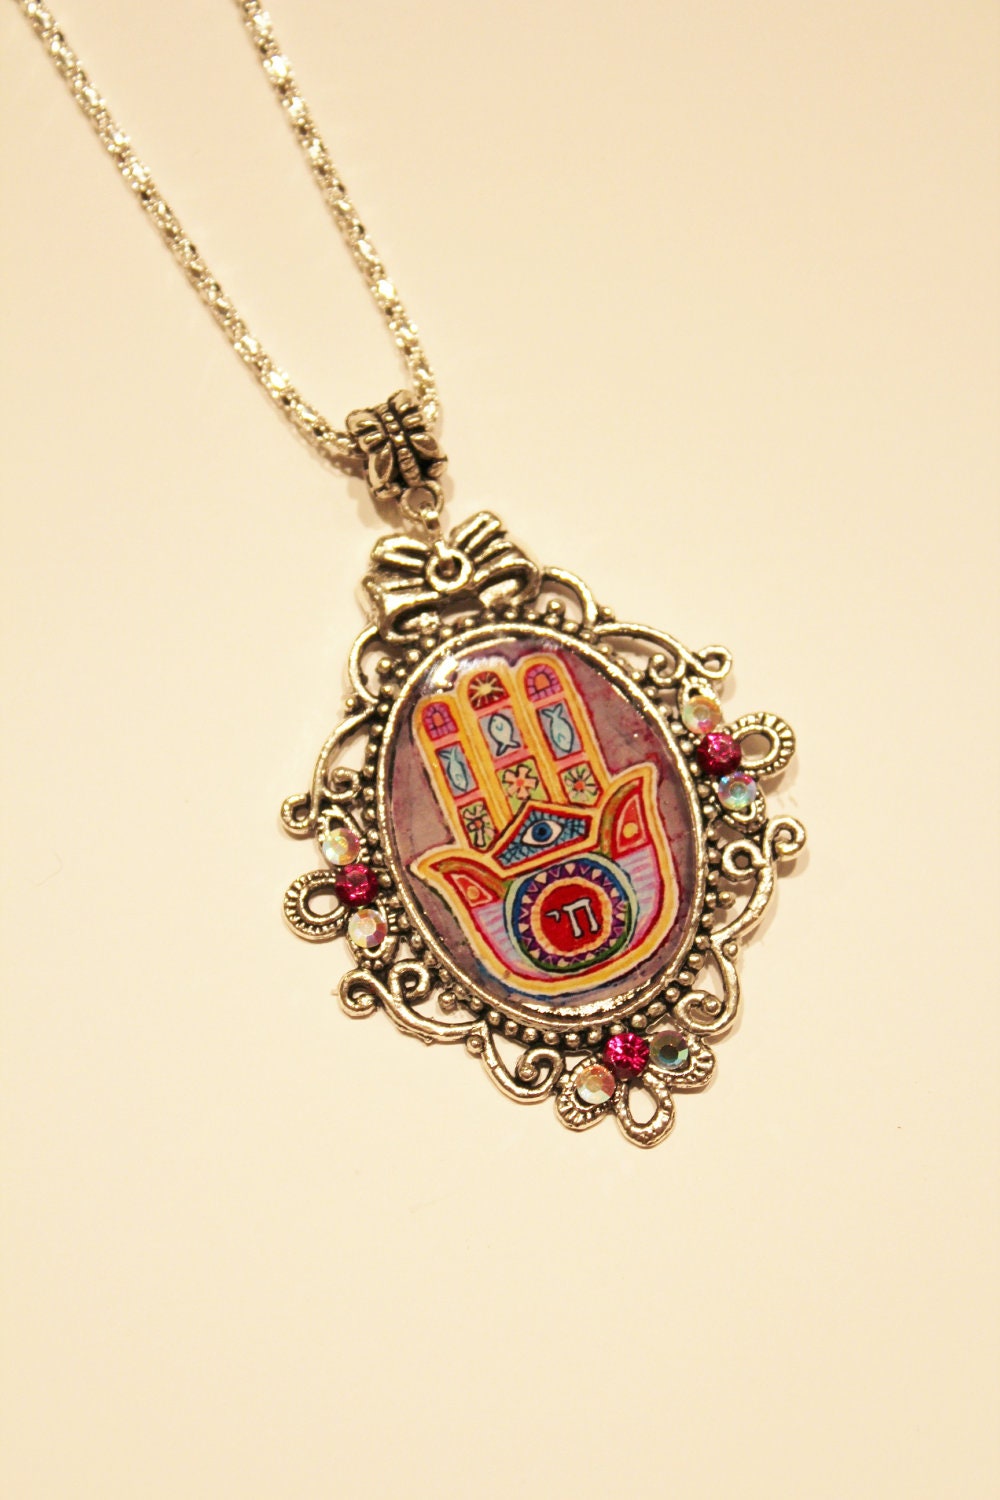 Chai charm necklace, evil eye necklace, Hamsa necklace, Treee of life, Hebrew charm necklace, Judaica, evil eye necklace, Life charm